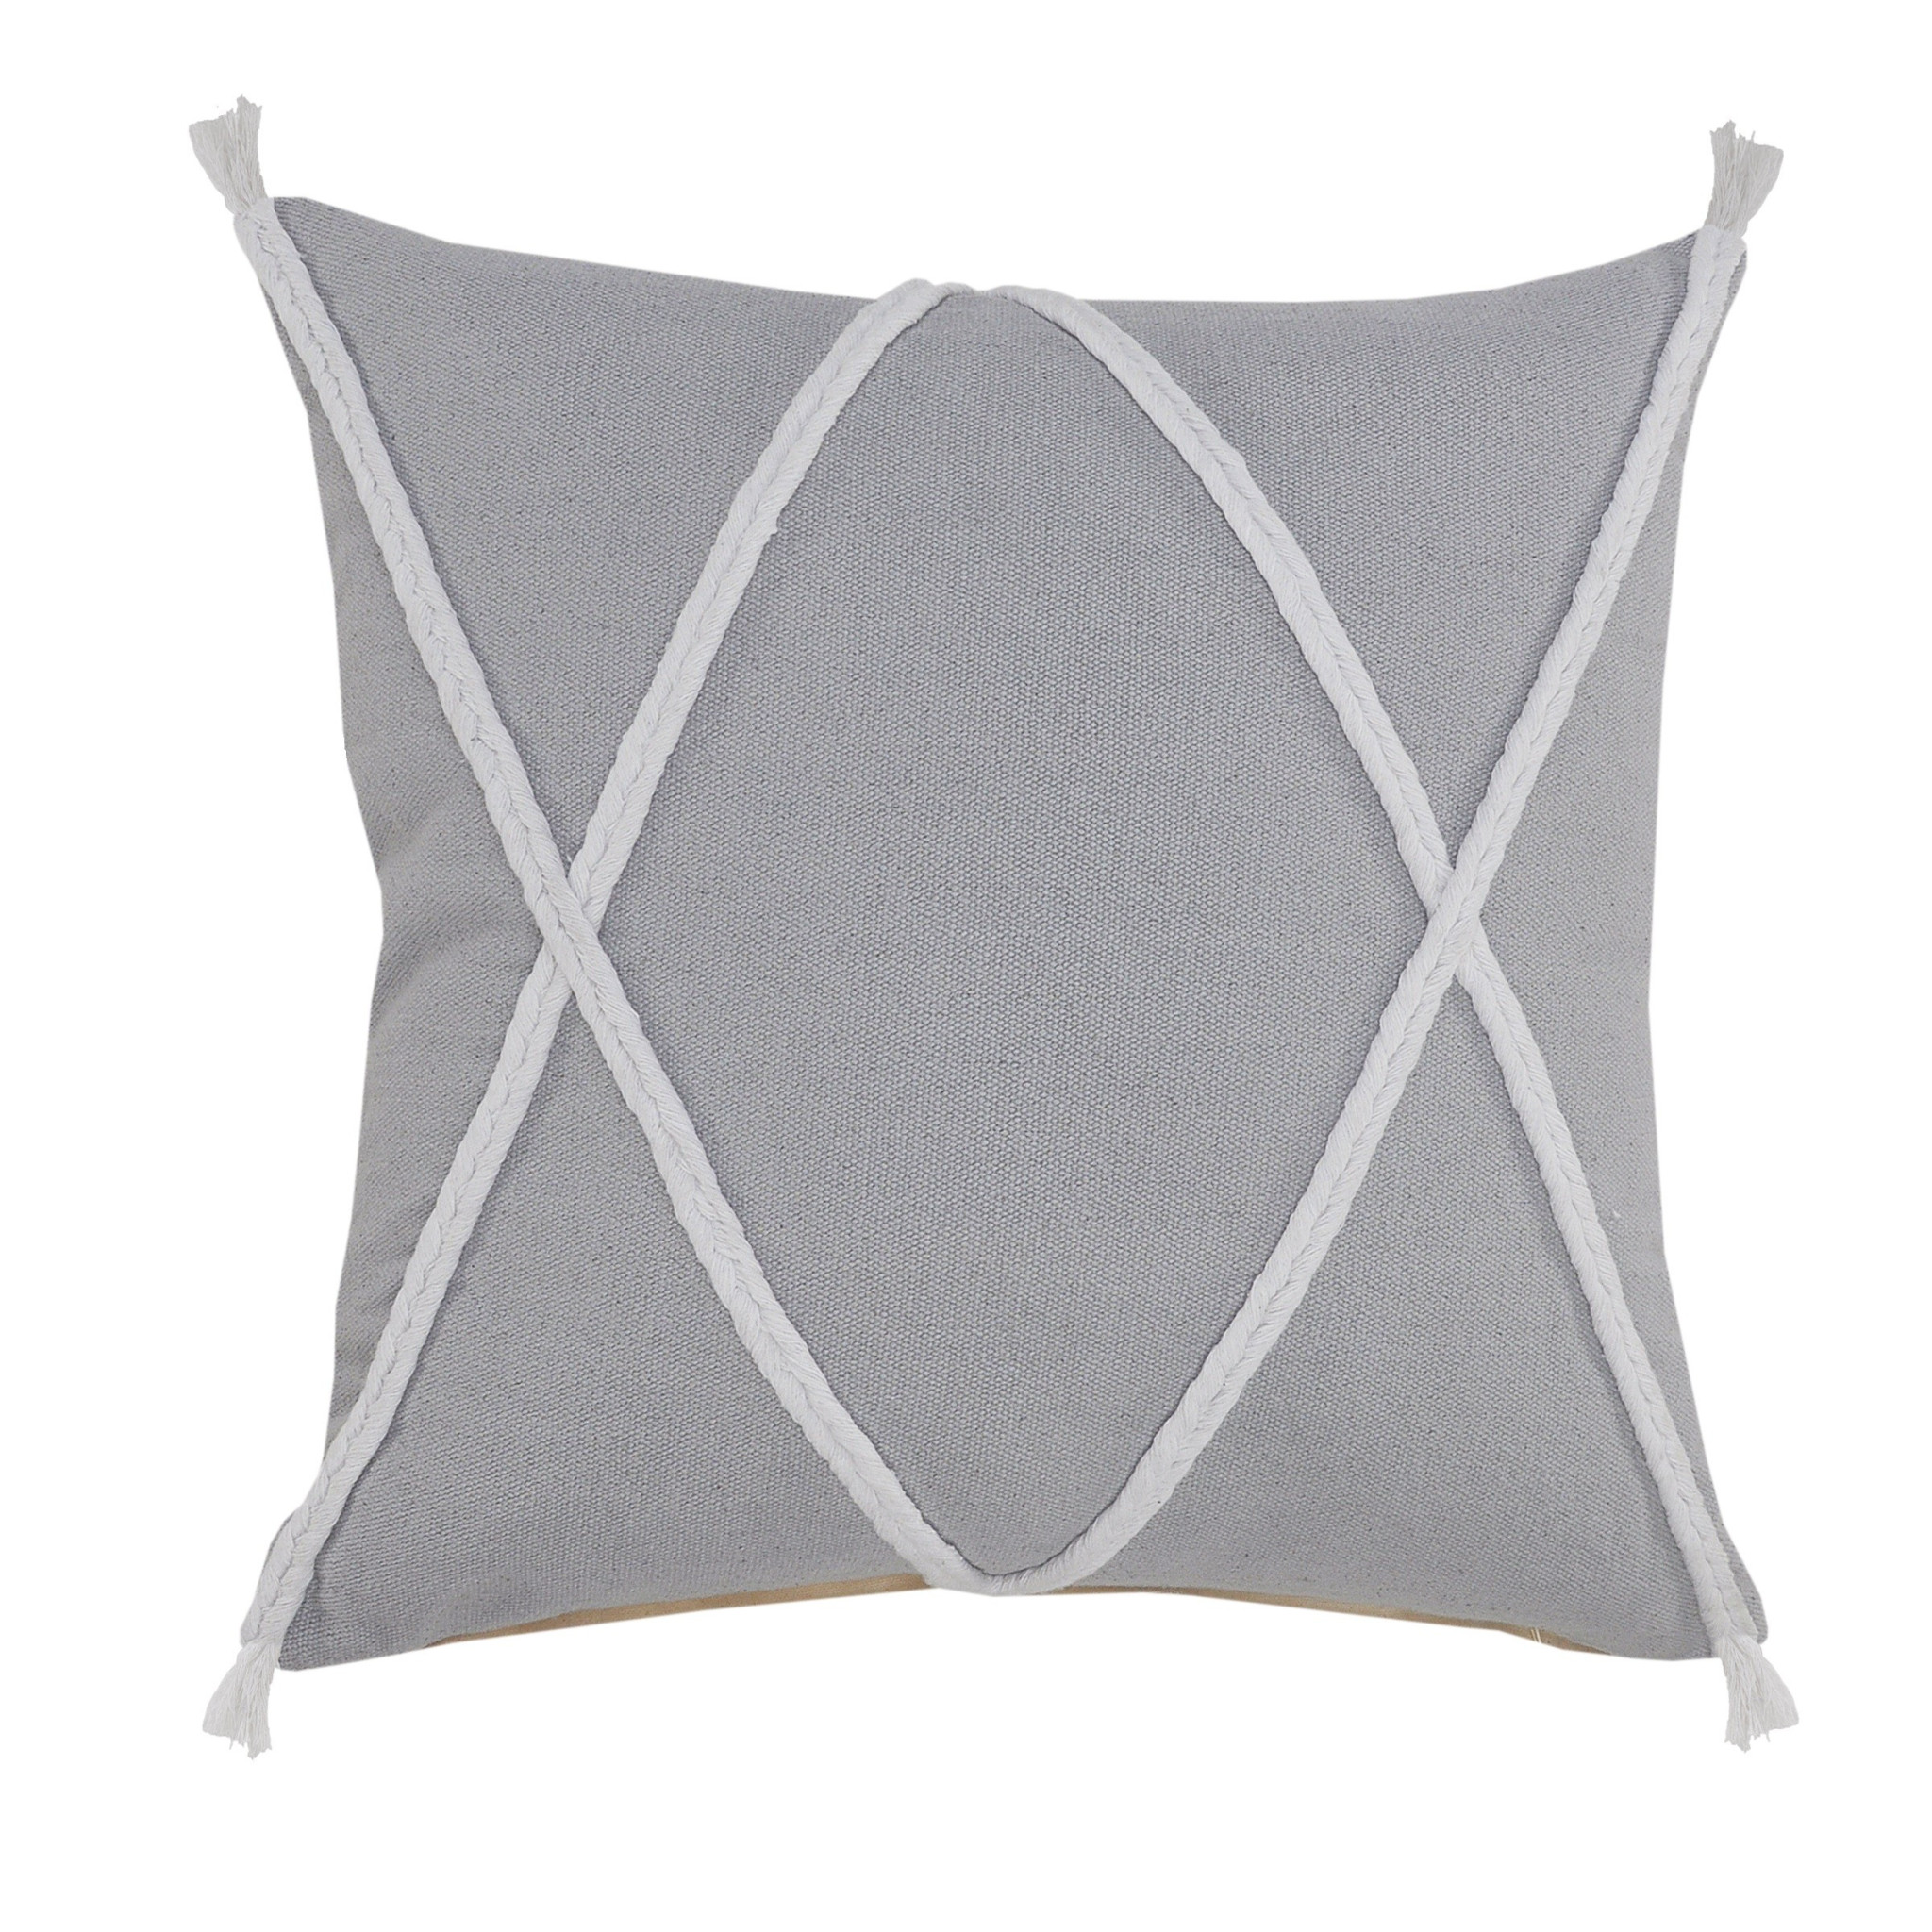 20" X 20" Light Gray And White 100% Cotton Coastal Zippered Pillow-517156-1